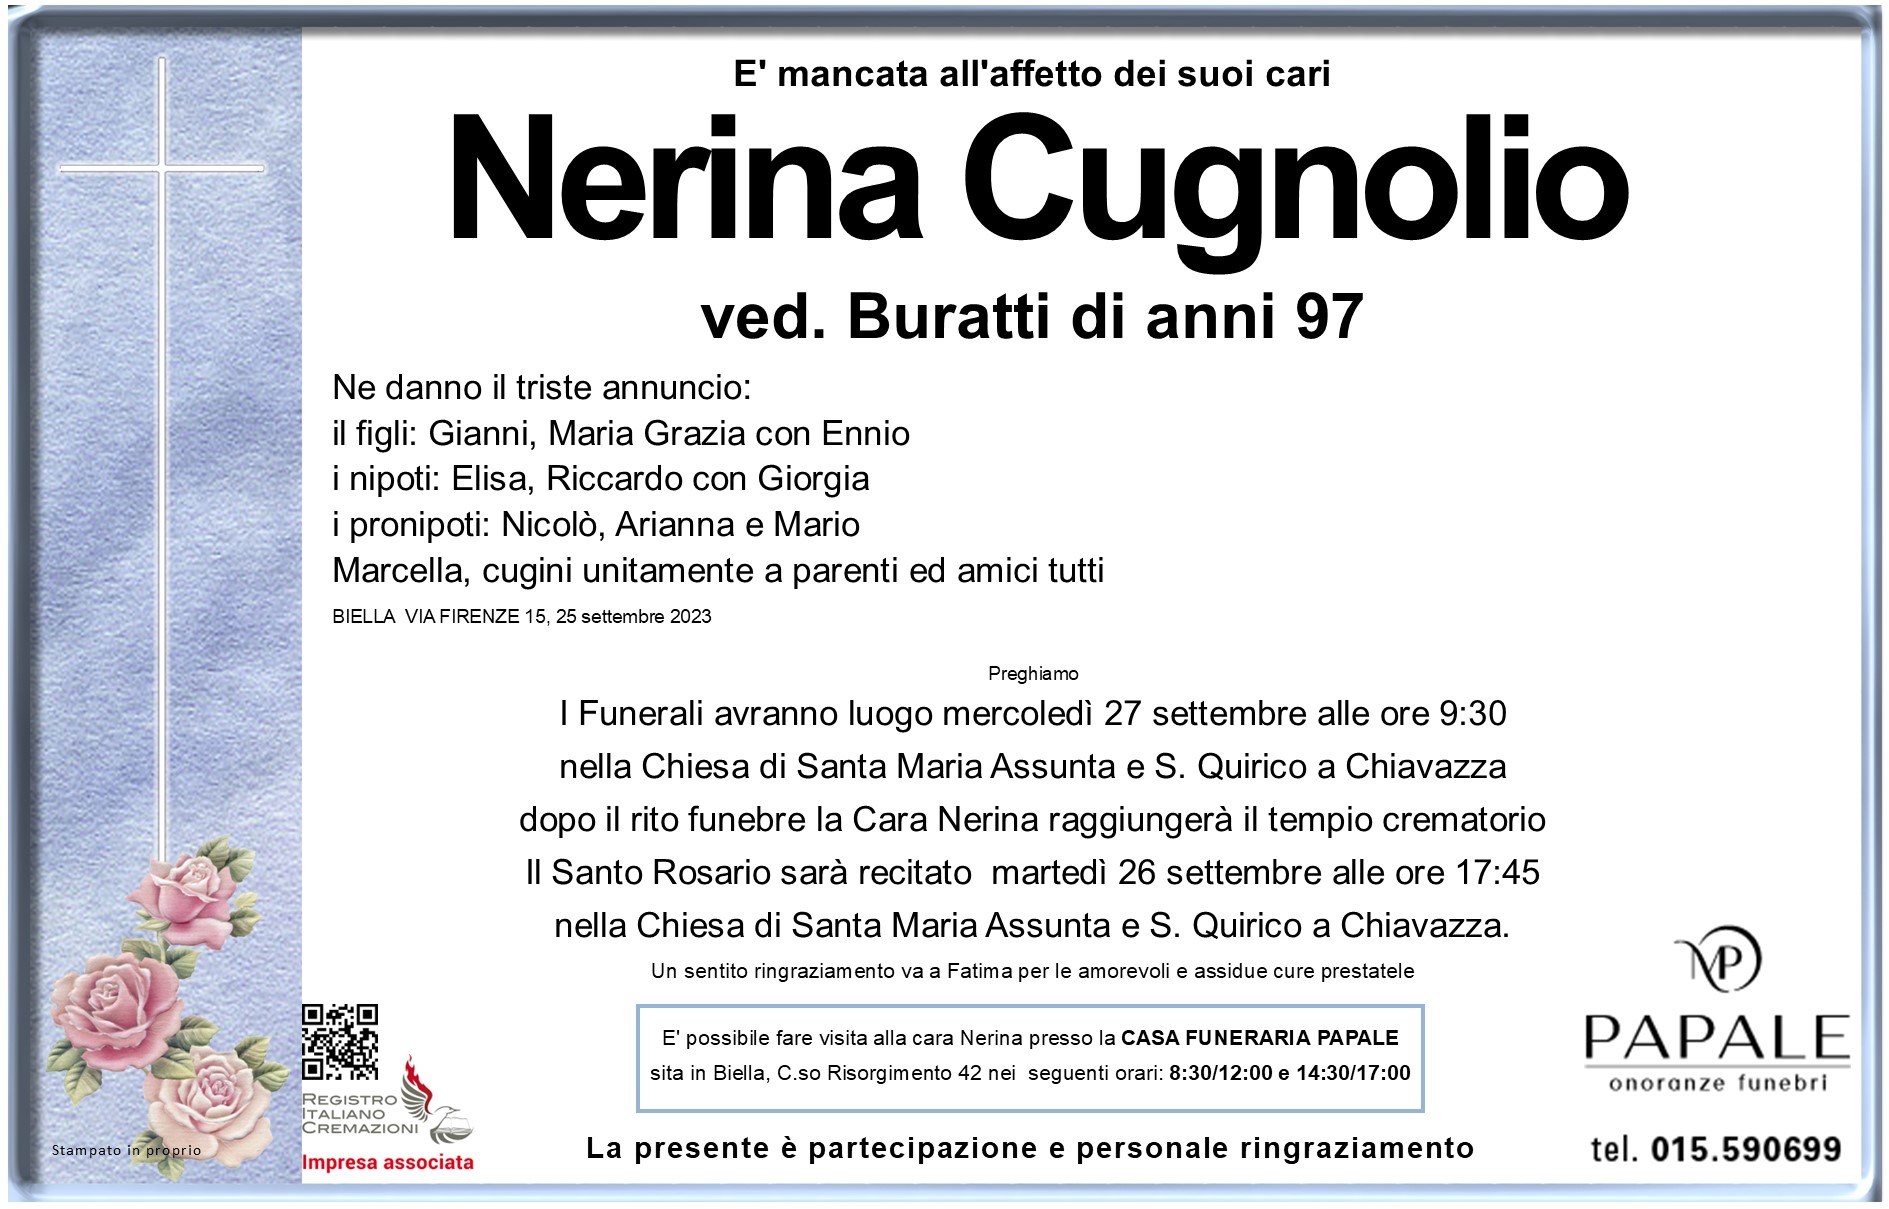 Onoranze Funebri Papale - Necrologi - Necrologio di Nerina Cugnolio